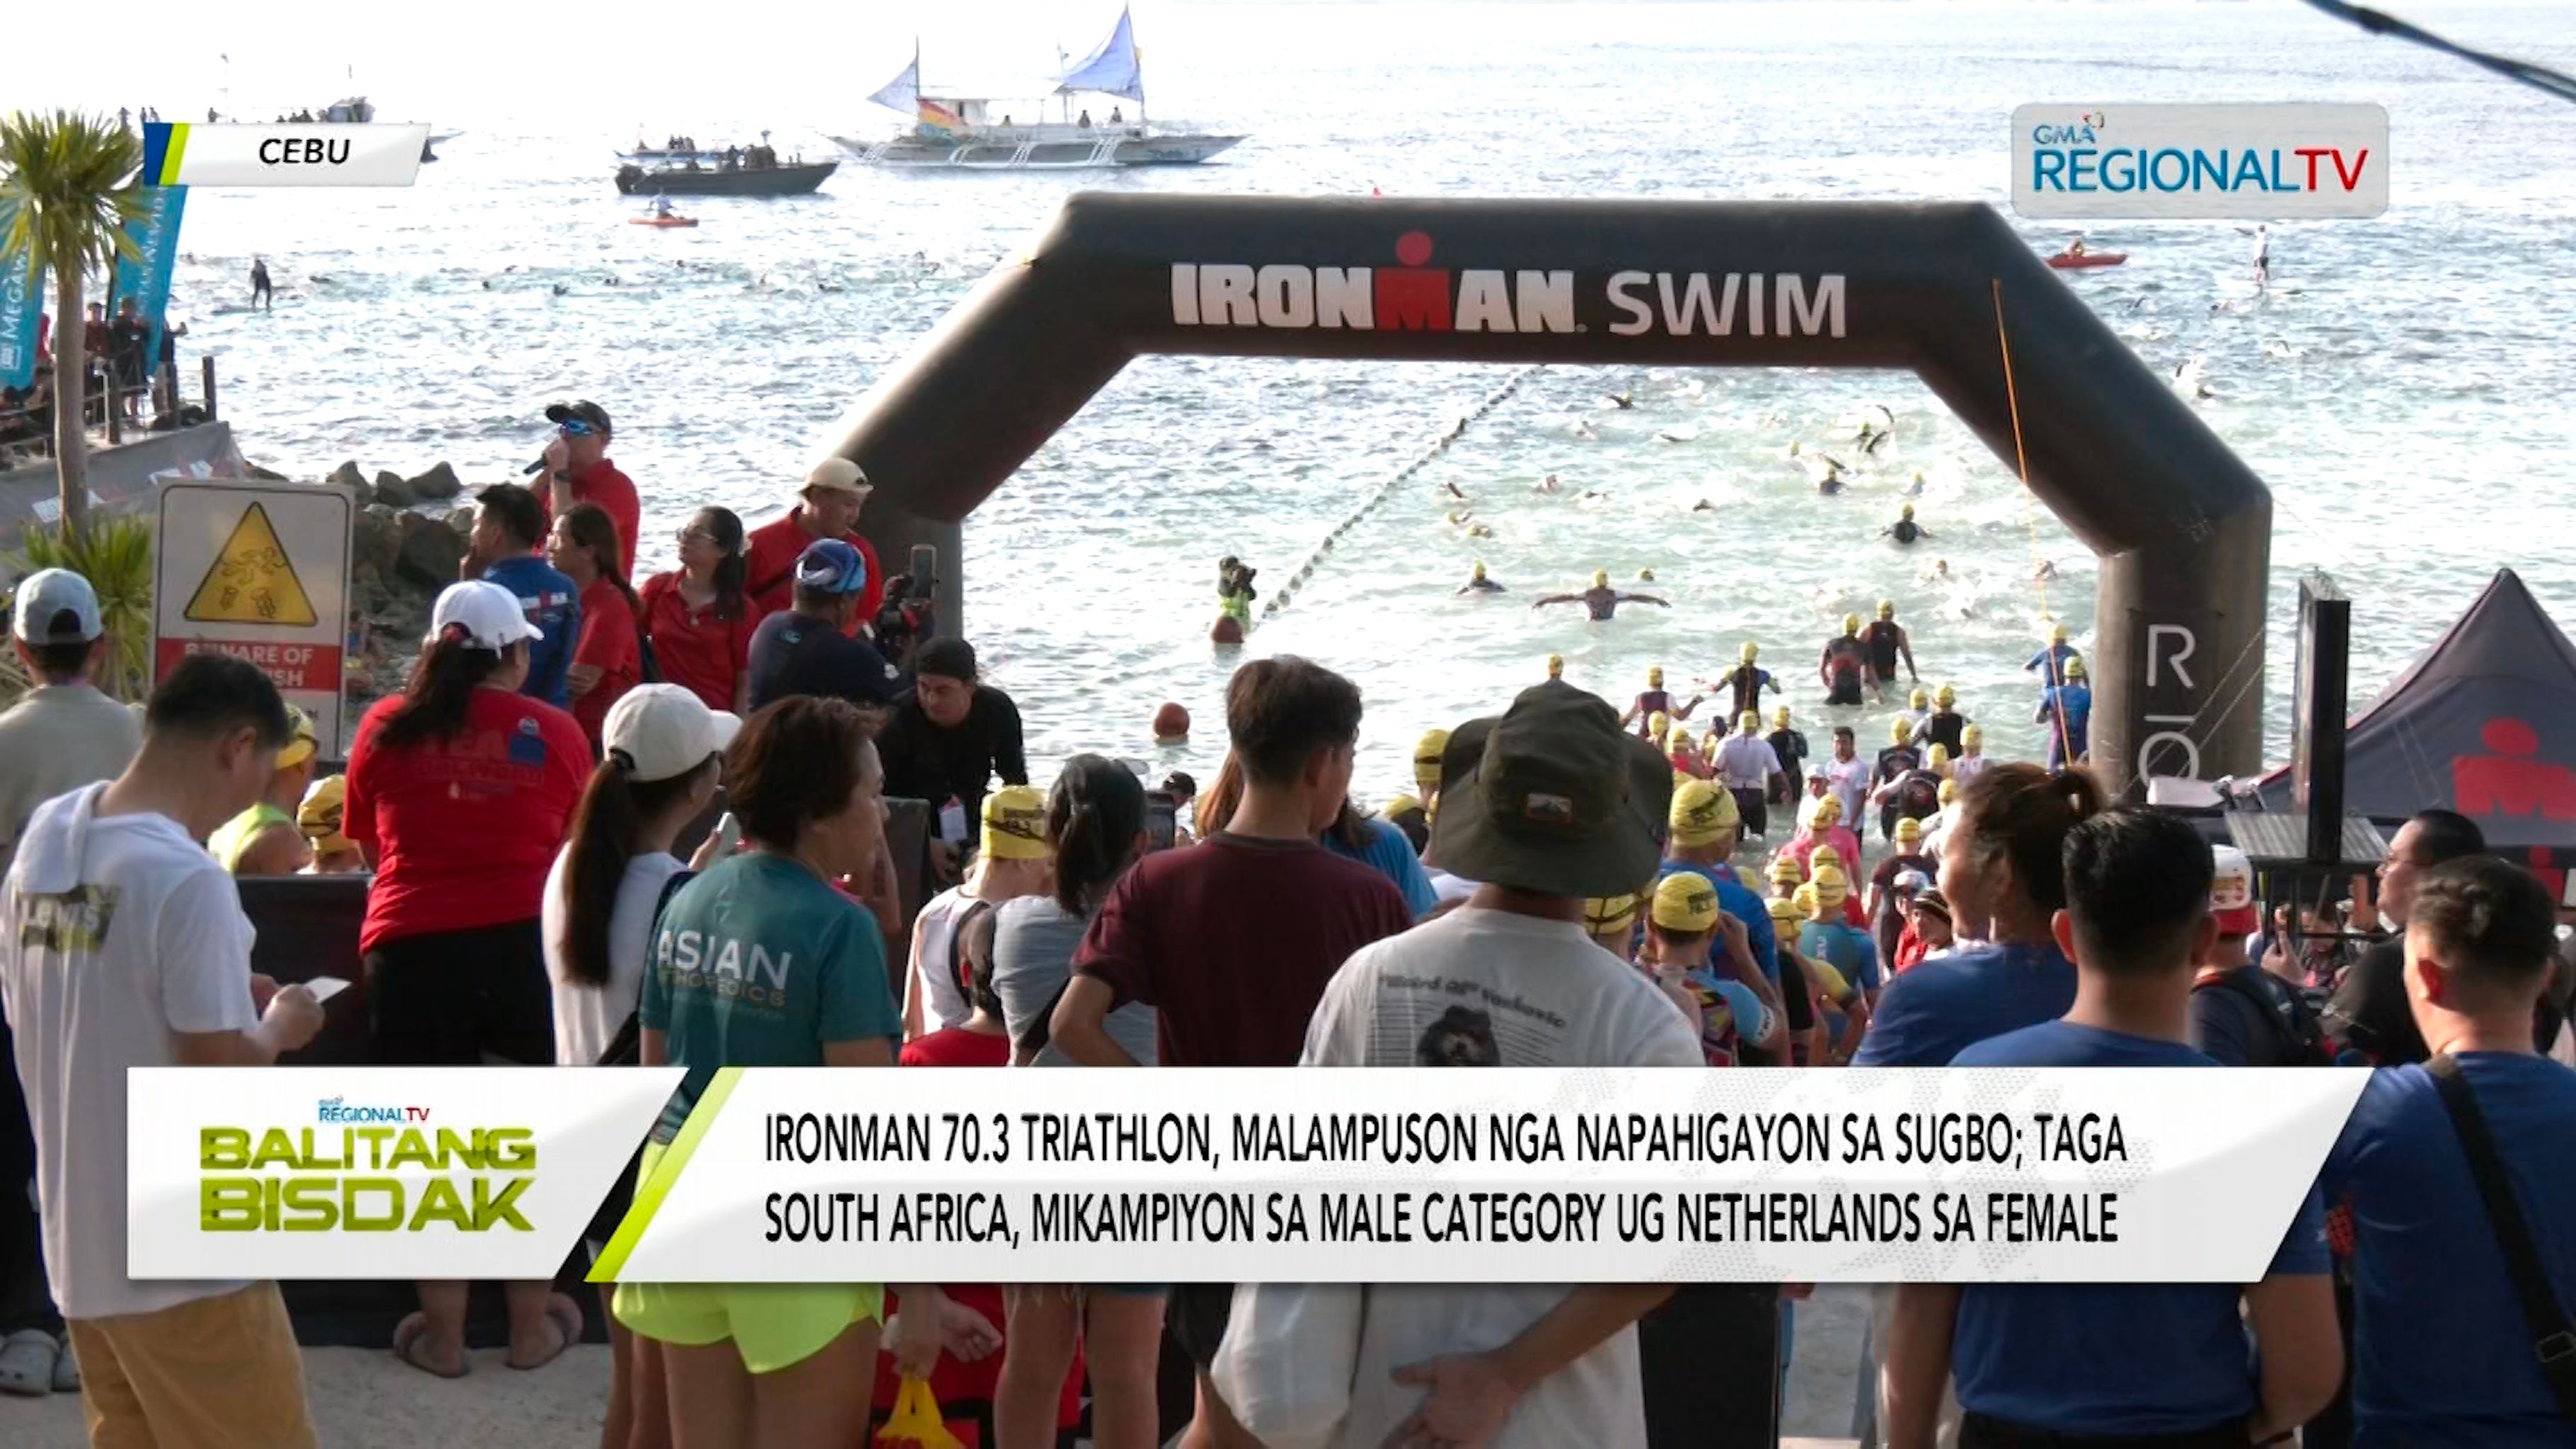 Ironman 70.3 Triathlon sa Lapu-Lapu City, nagmalampuson